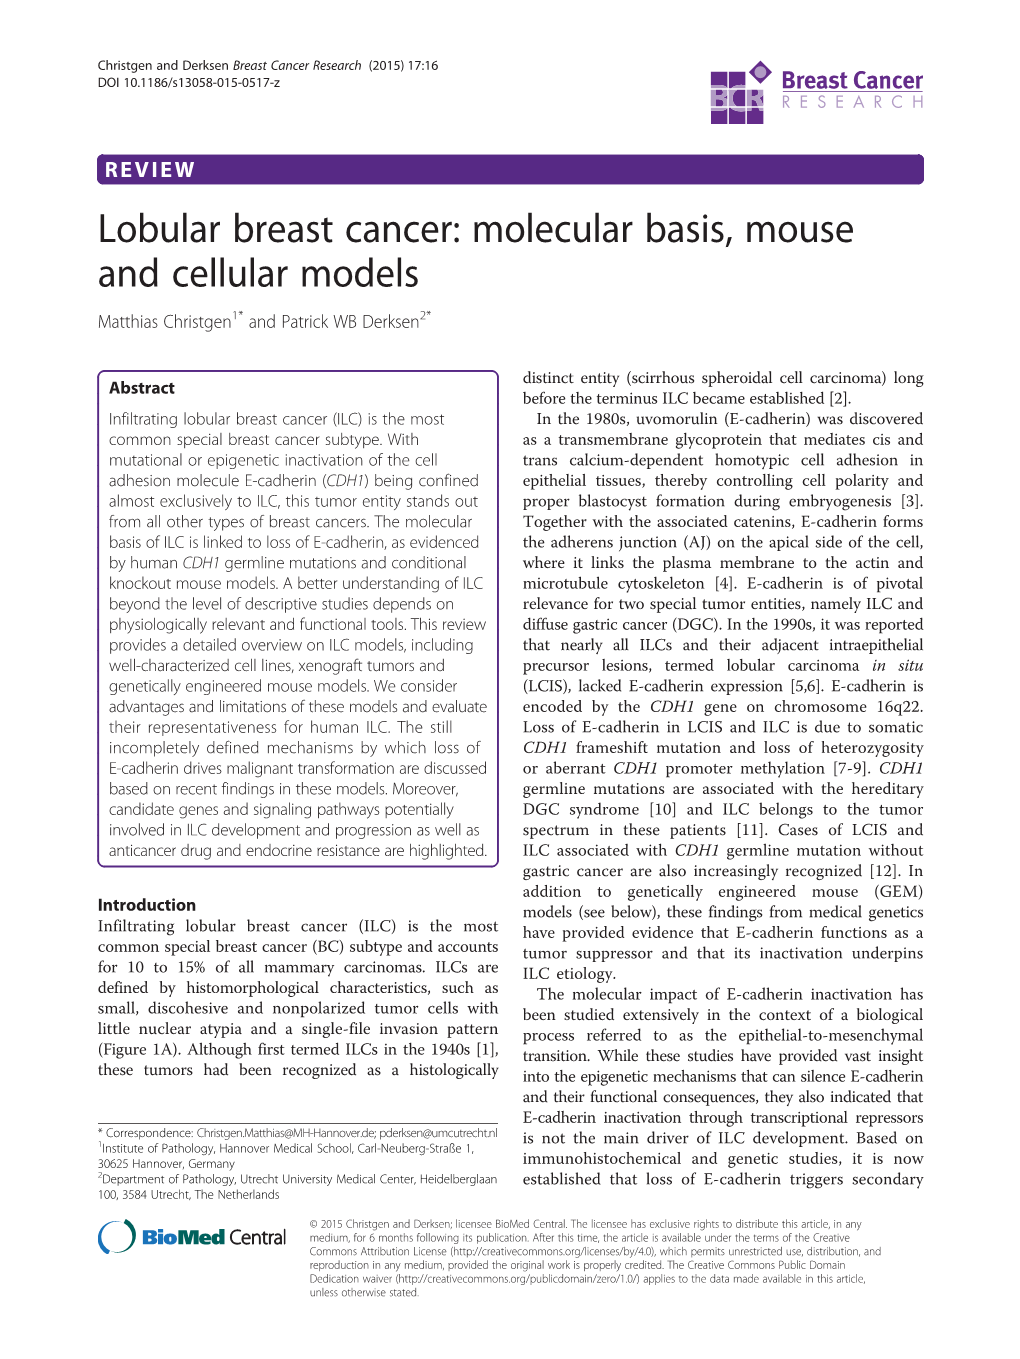 Lobular Breast Cancer: Molecular Basis, Mouse and Cellular Models Matthias Christgen1* and Patrick WB Derksen2*